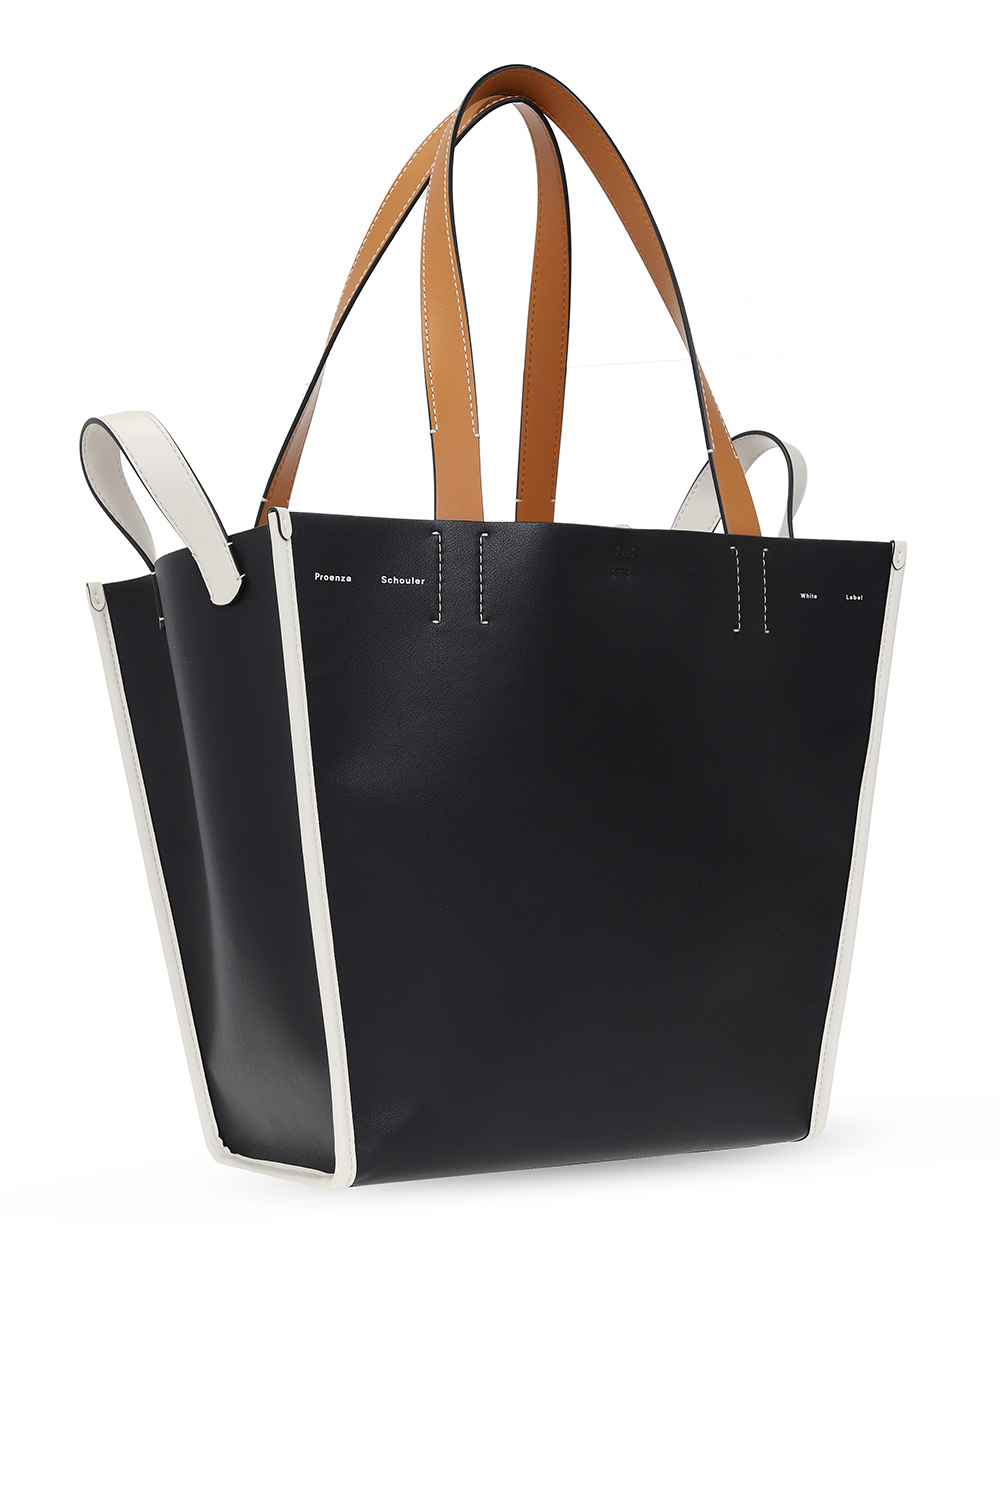 Proenza Schouler White Label ‘Mercer XL’ shopper bag